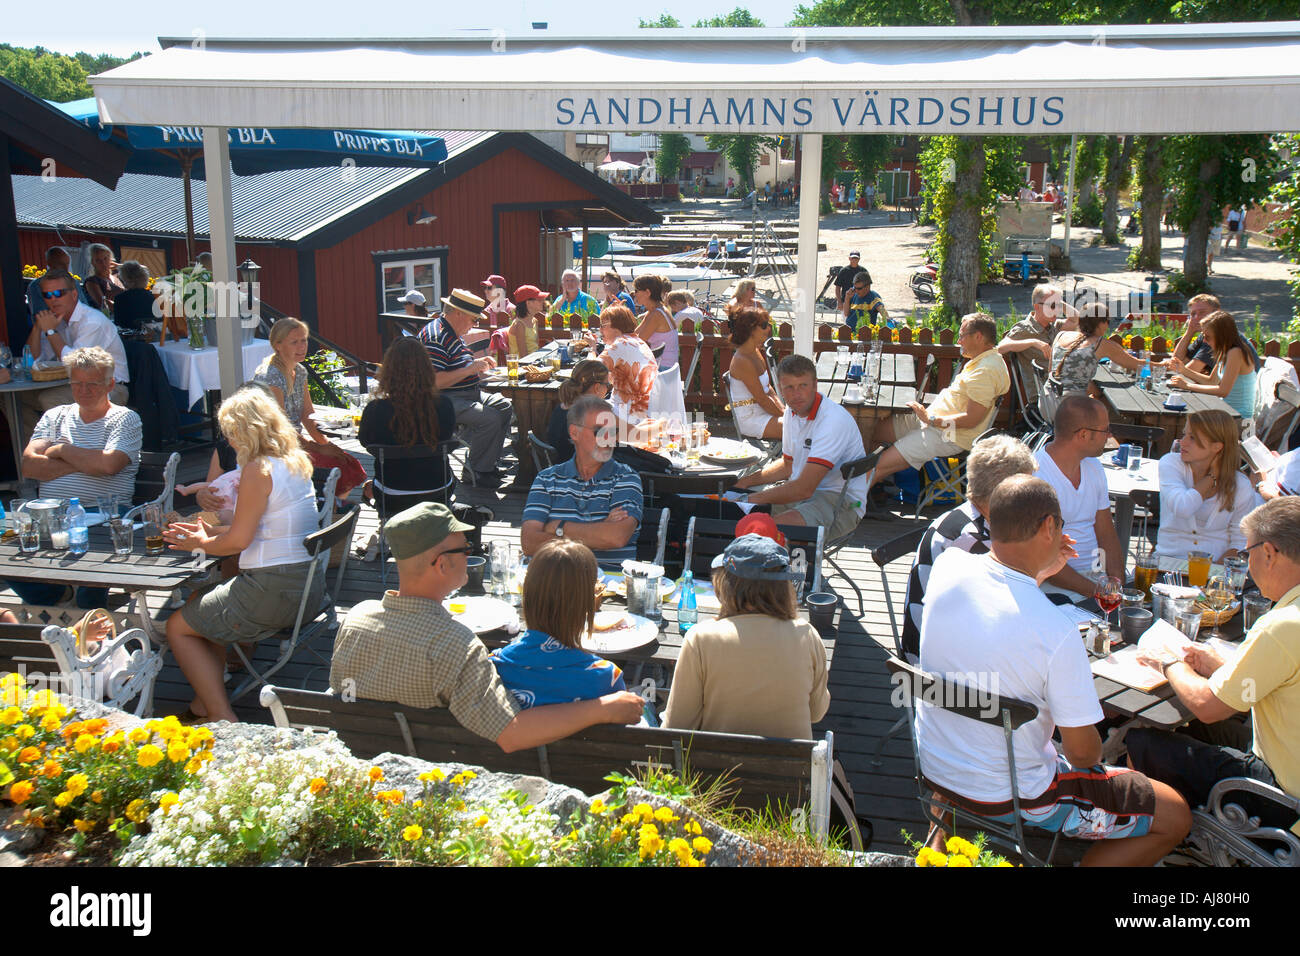 SWEDEN STOCKHOLM ARCHIPELAGO SANDHAMN ISLAND SANDHAMNS VARDSHUS RESTAURANT Stock Photo